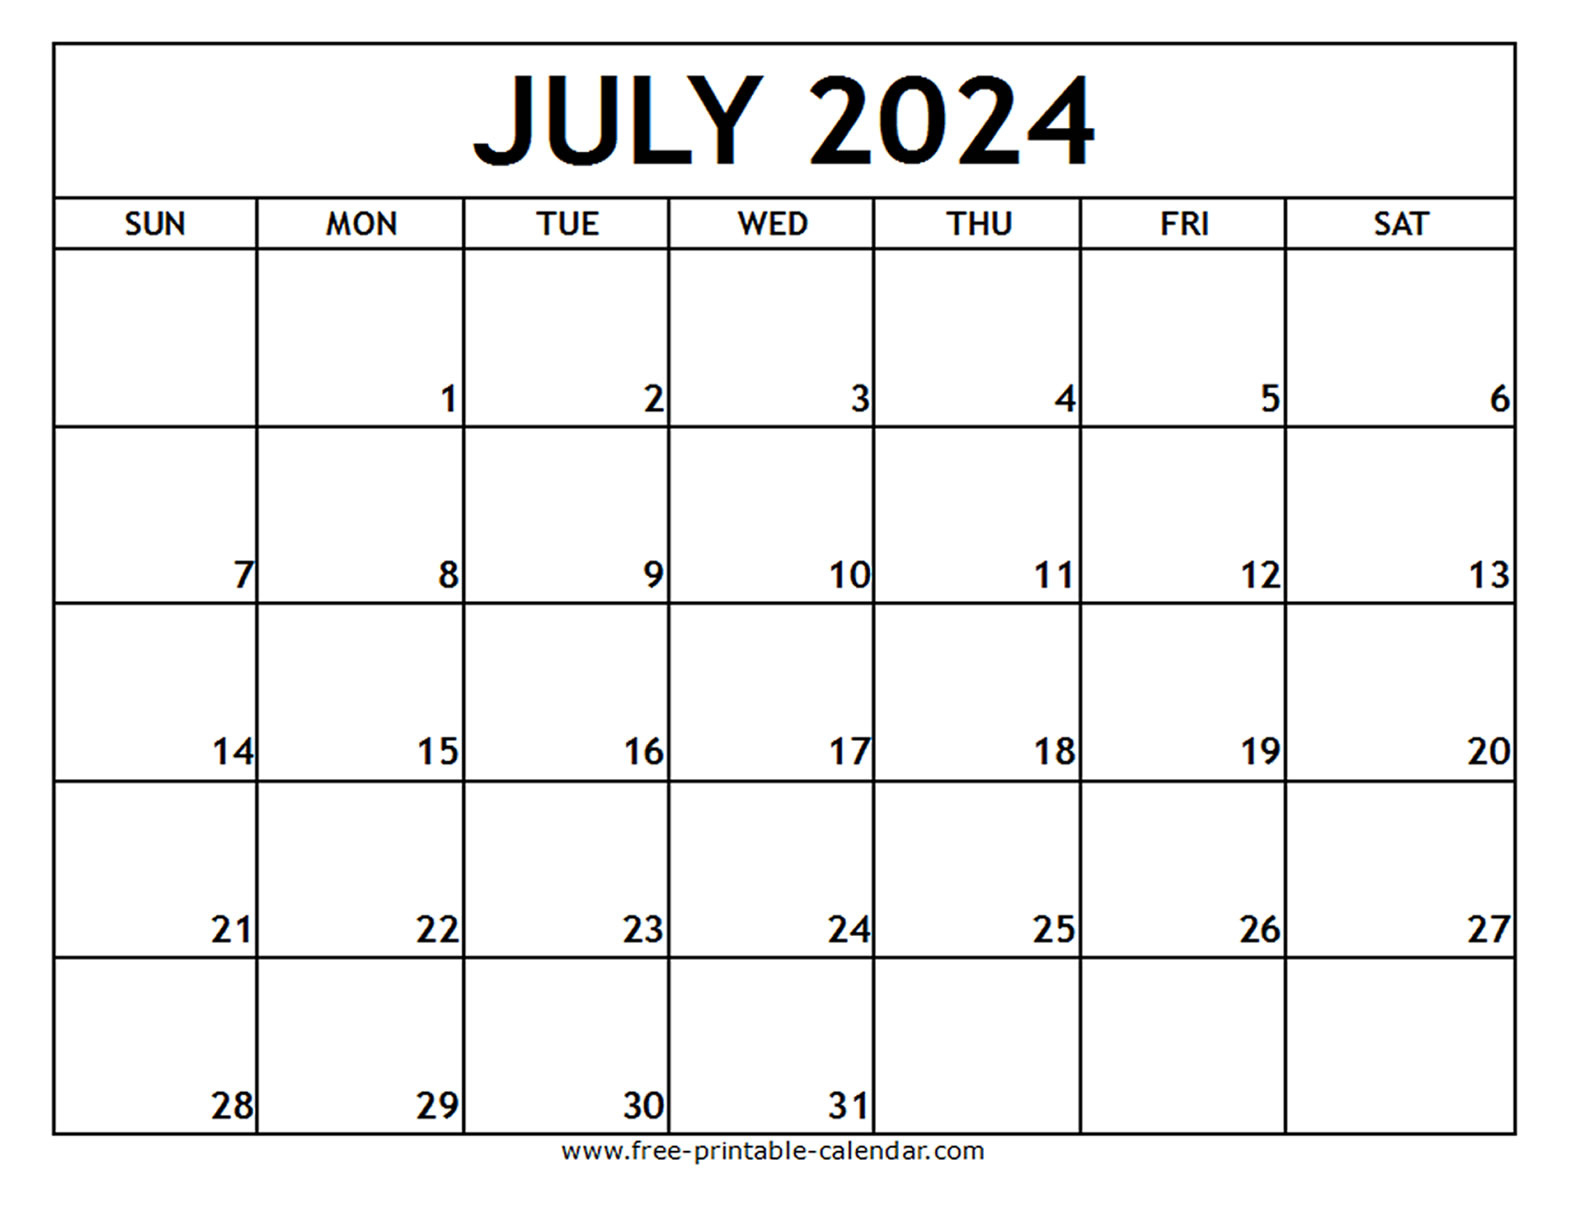 July 2024 Printable Calendar - Free-Printable-Calendar within Calendar July 2024 Printable Free